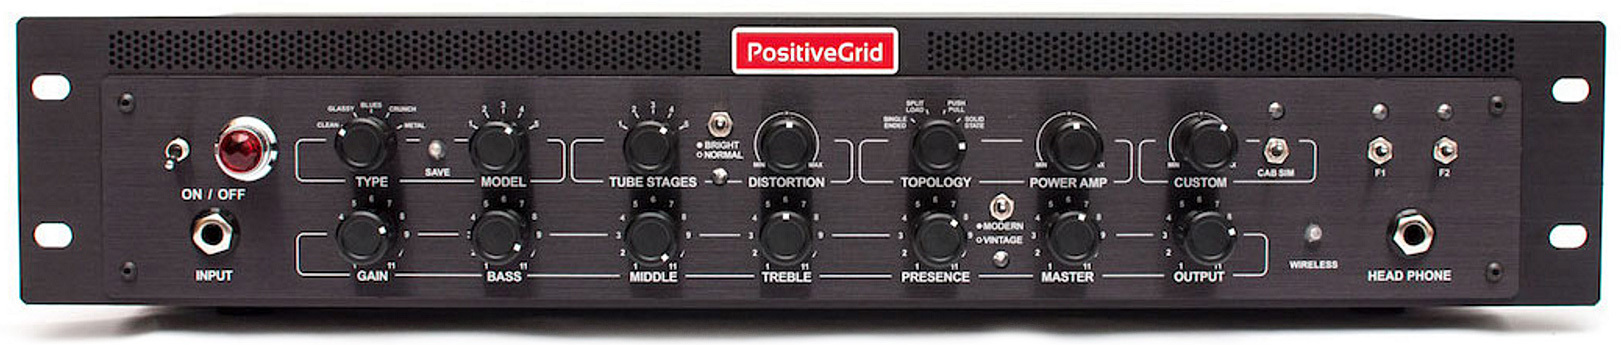 Positive Grid Bias Rack Processor - Electric guitar amp head - Main picture